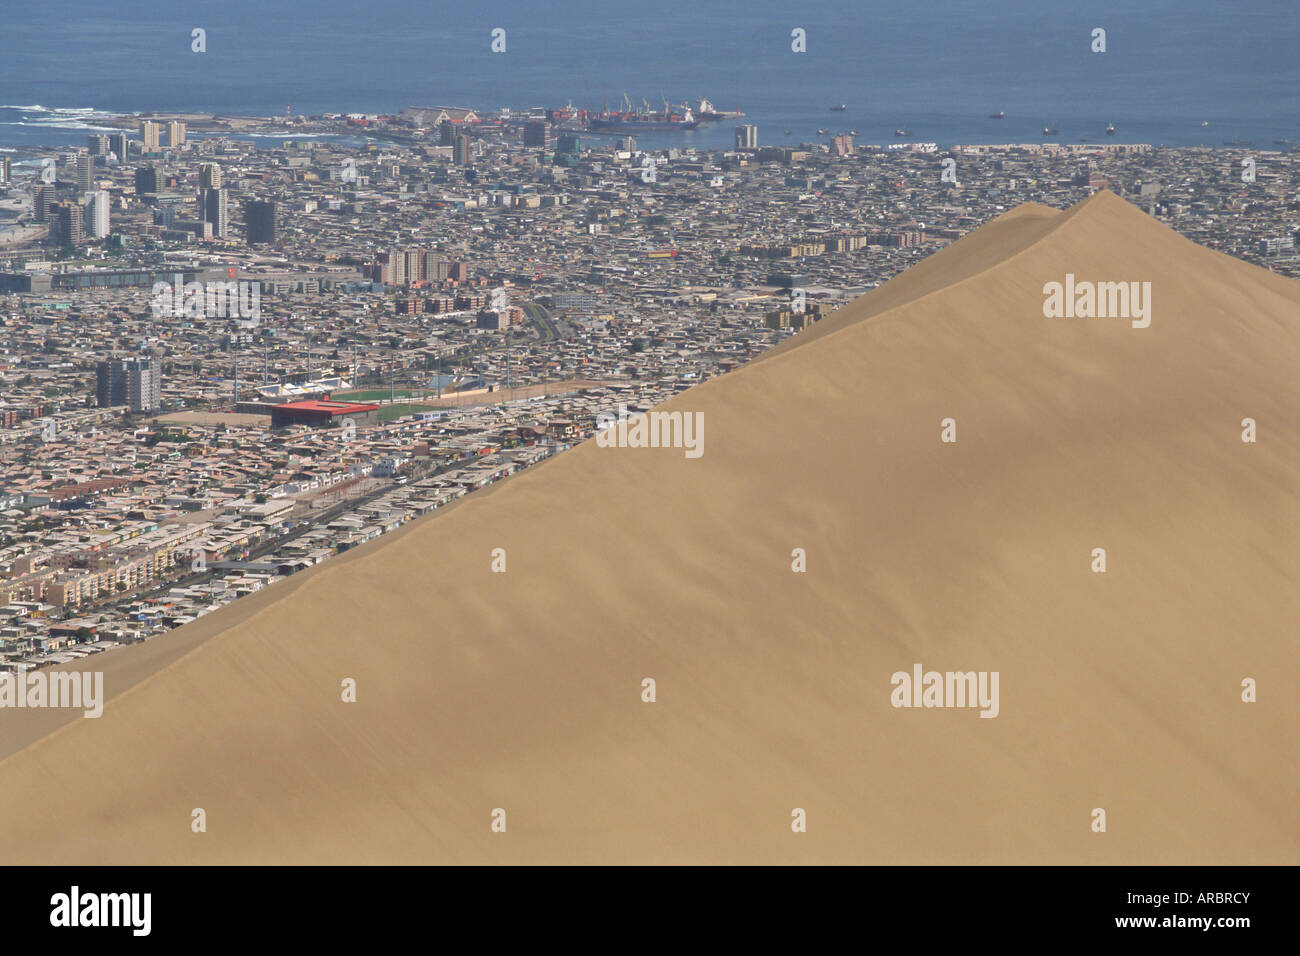 Giant sand dune above large city, Iquique, Atacama coast, Chile, South America Stock Photo